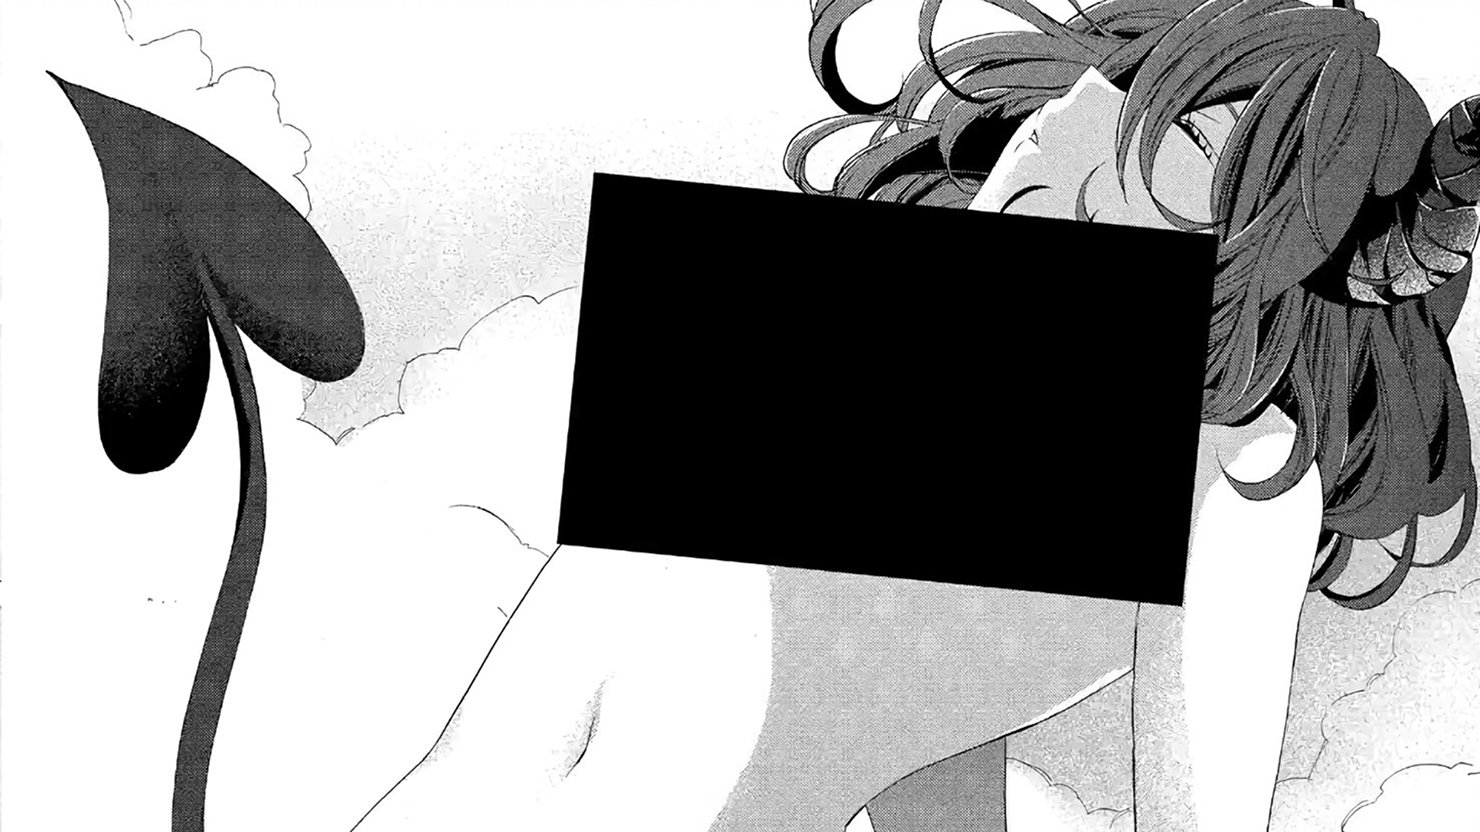 Цензурим всё! Новый сервис цифровой дистрибуции манги Manga Up! от Square Enix оказался в центре "цензурного" скандала